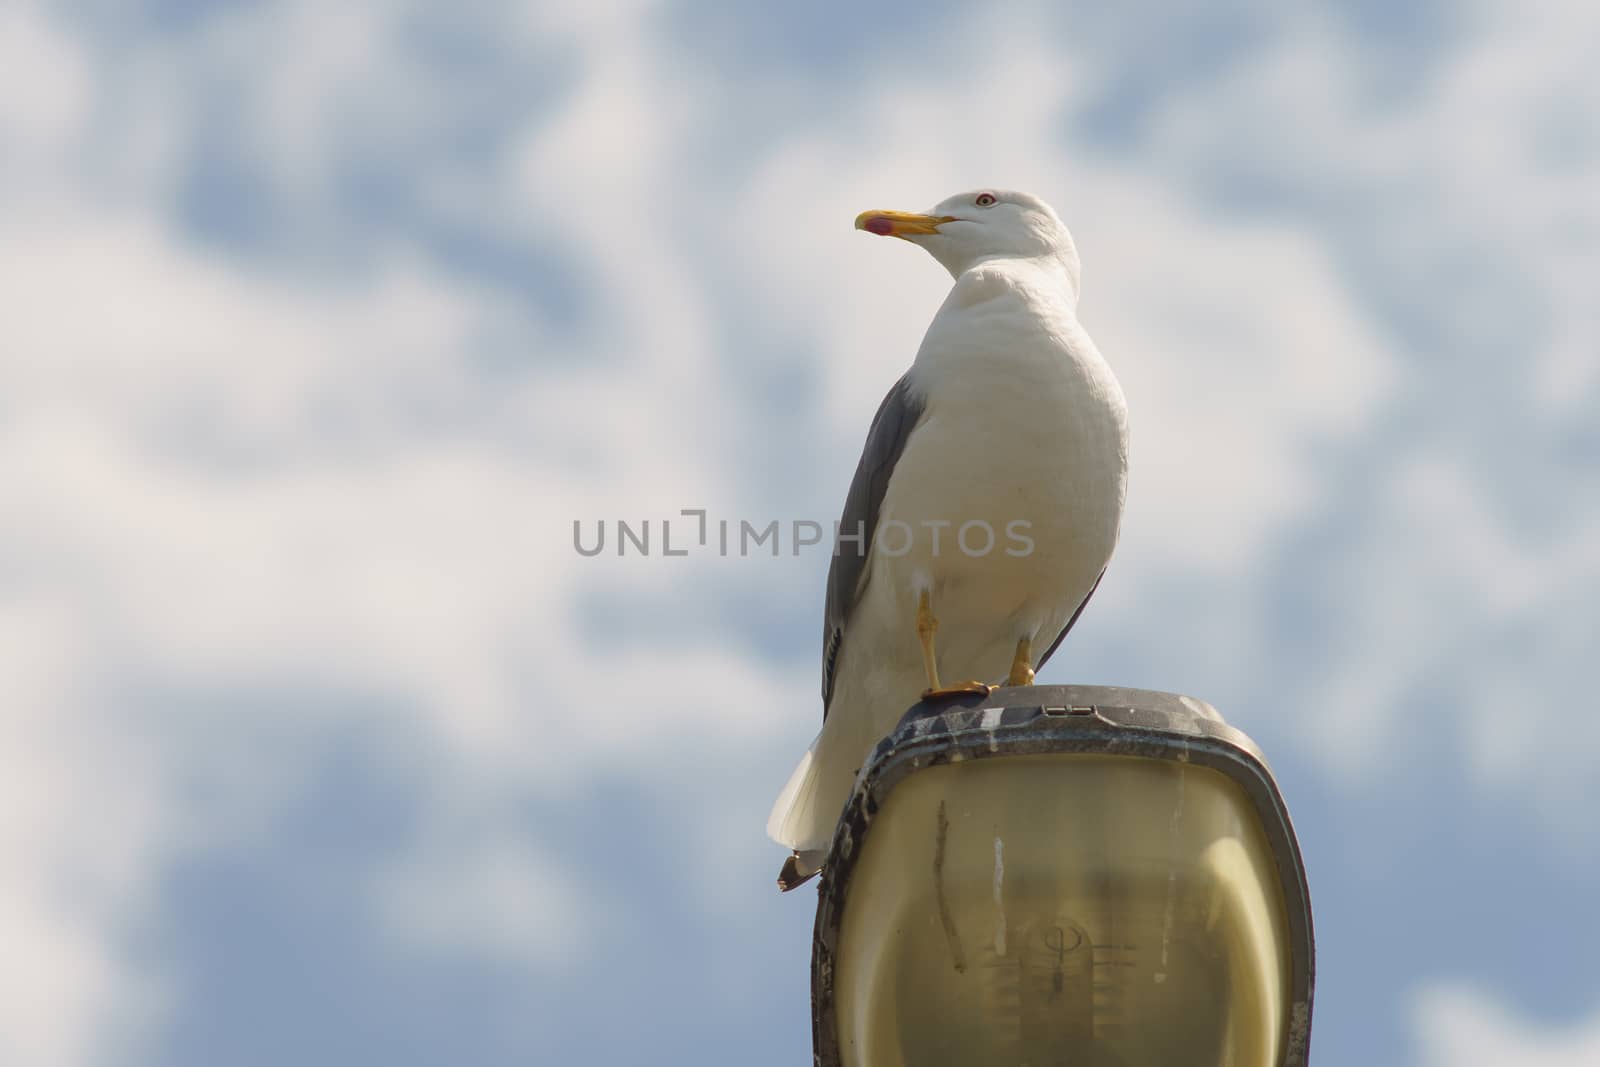 Sky, seagull and lamp by yury_kara